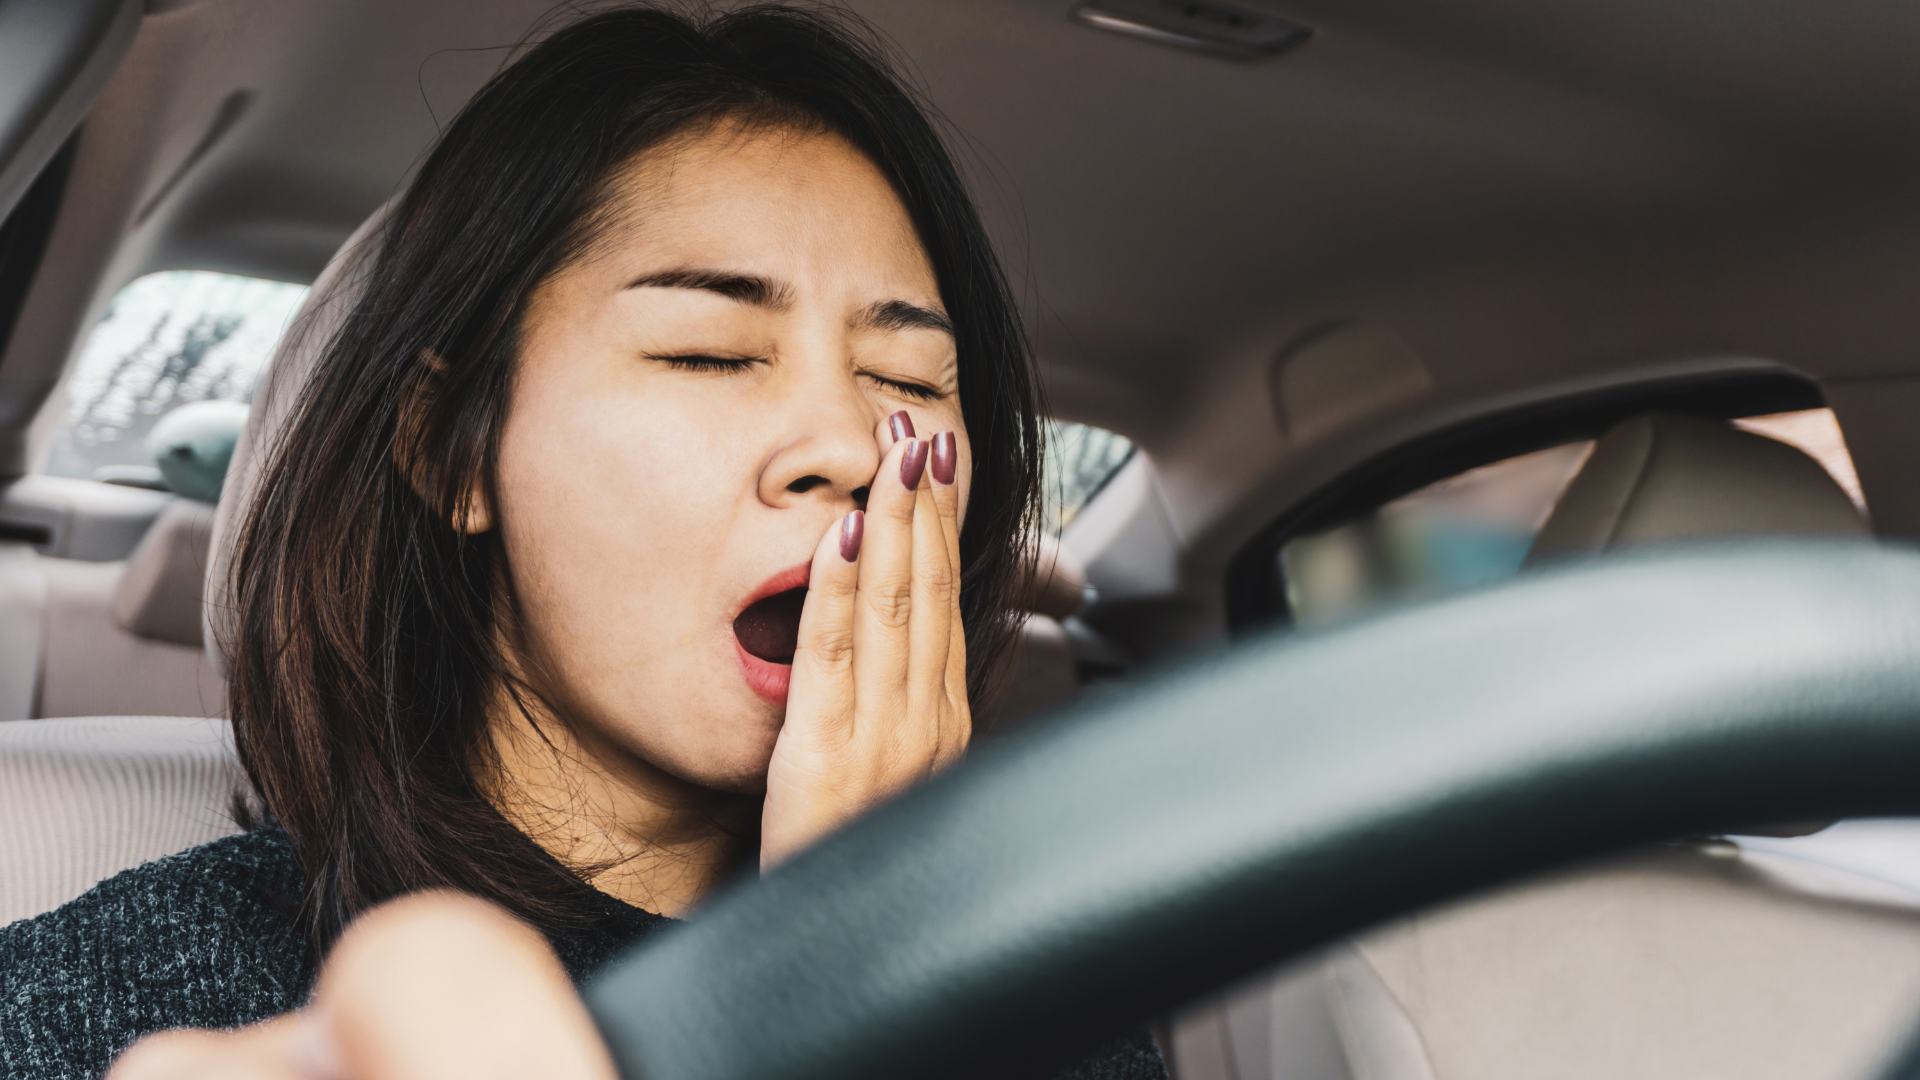 a woman yawns while driving a car...